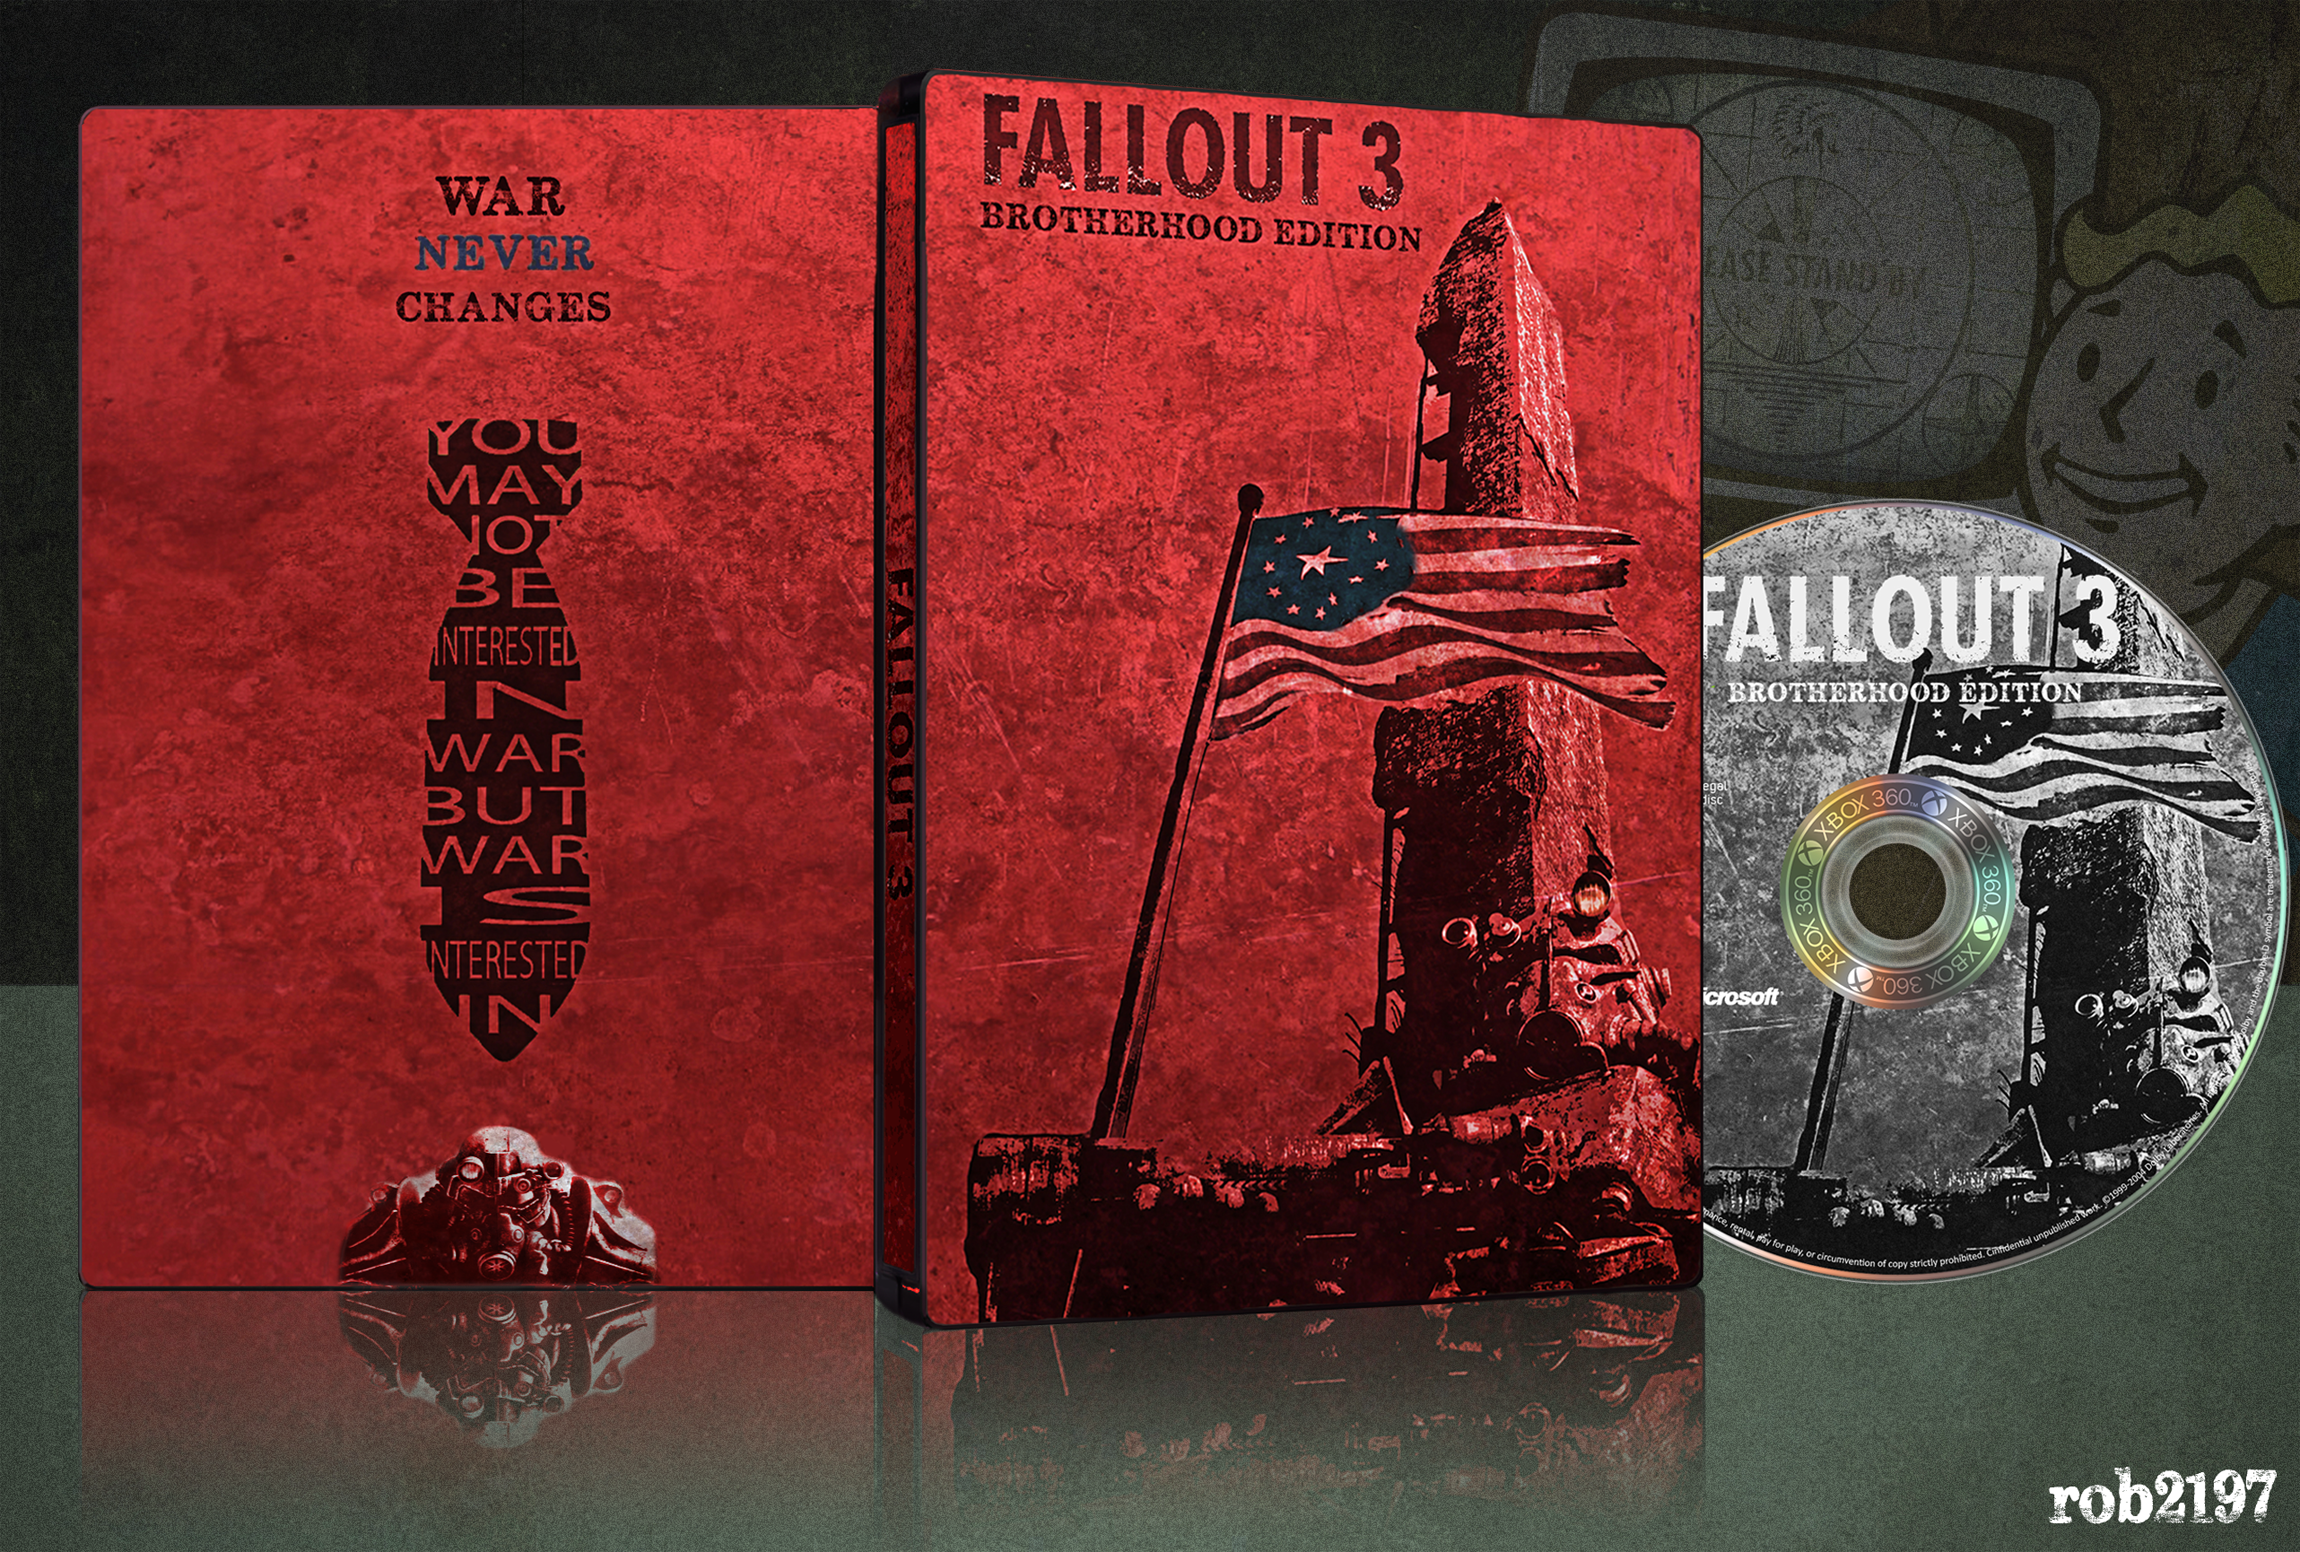 Fallout 3 Brotherhood Edition box cover